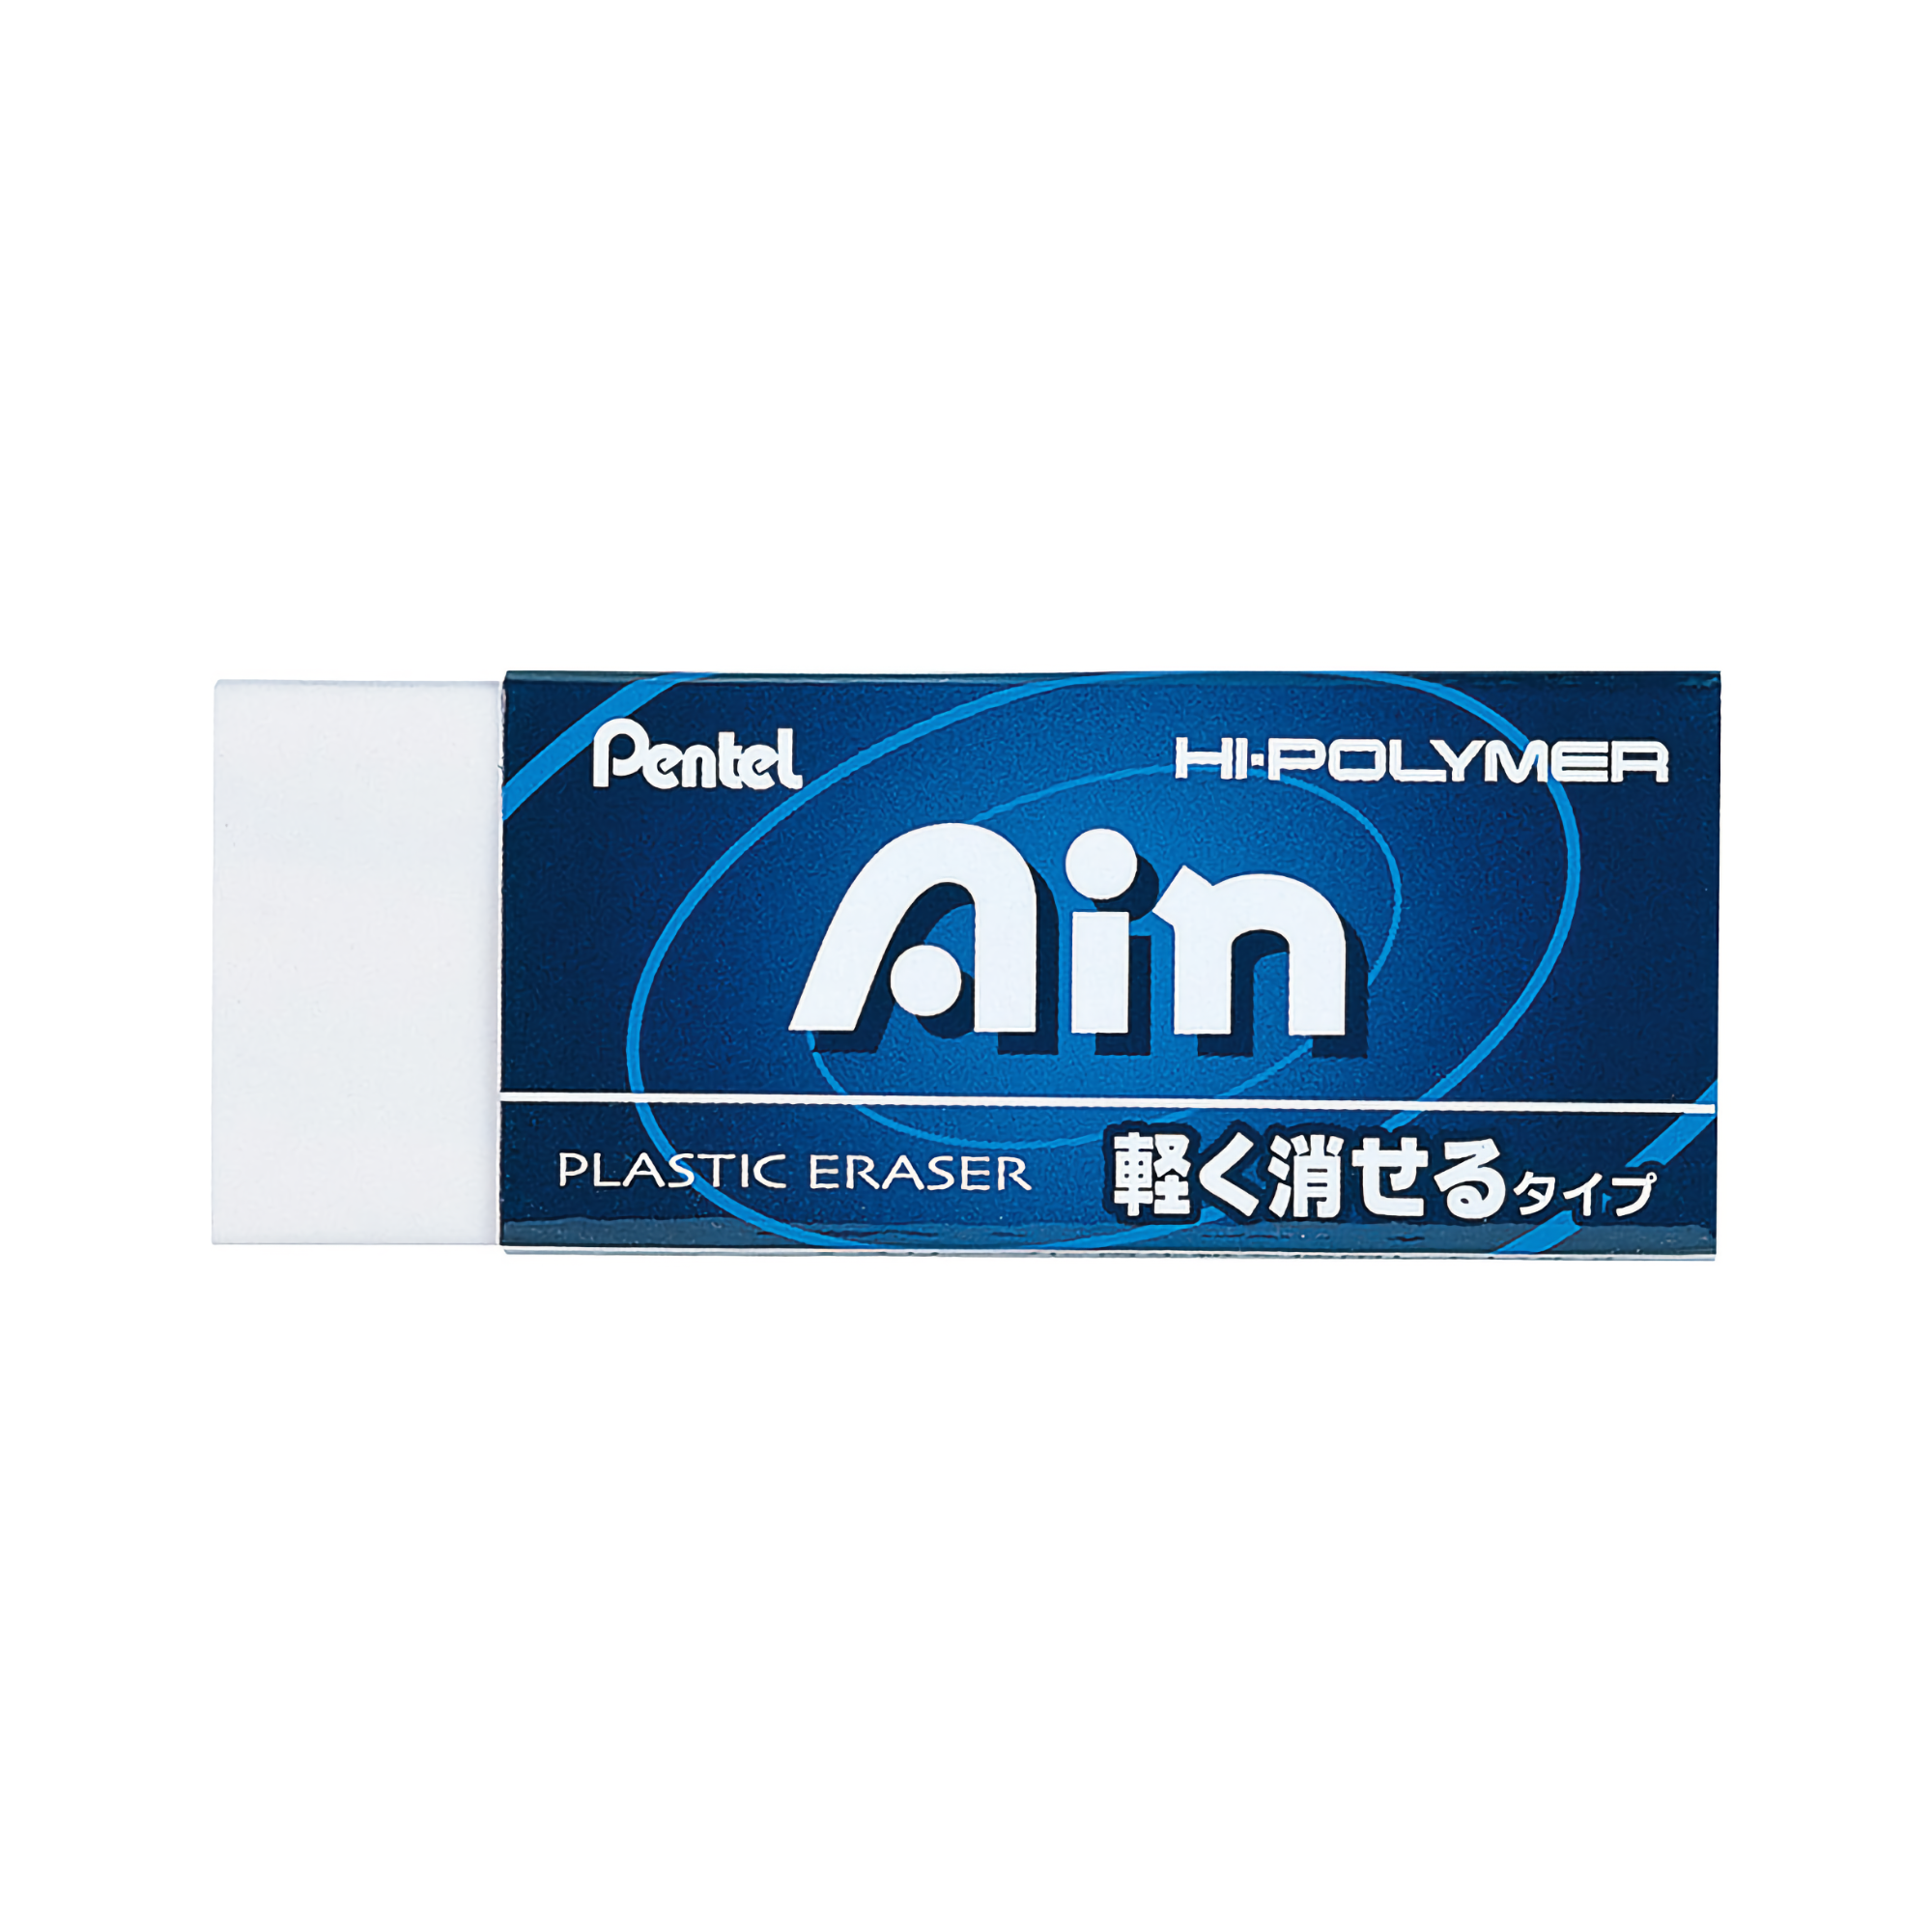 Pentel Ain Black Hi Polymer Large Eraser